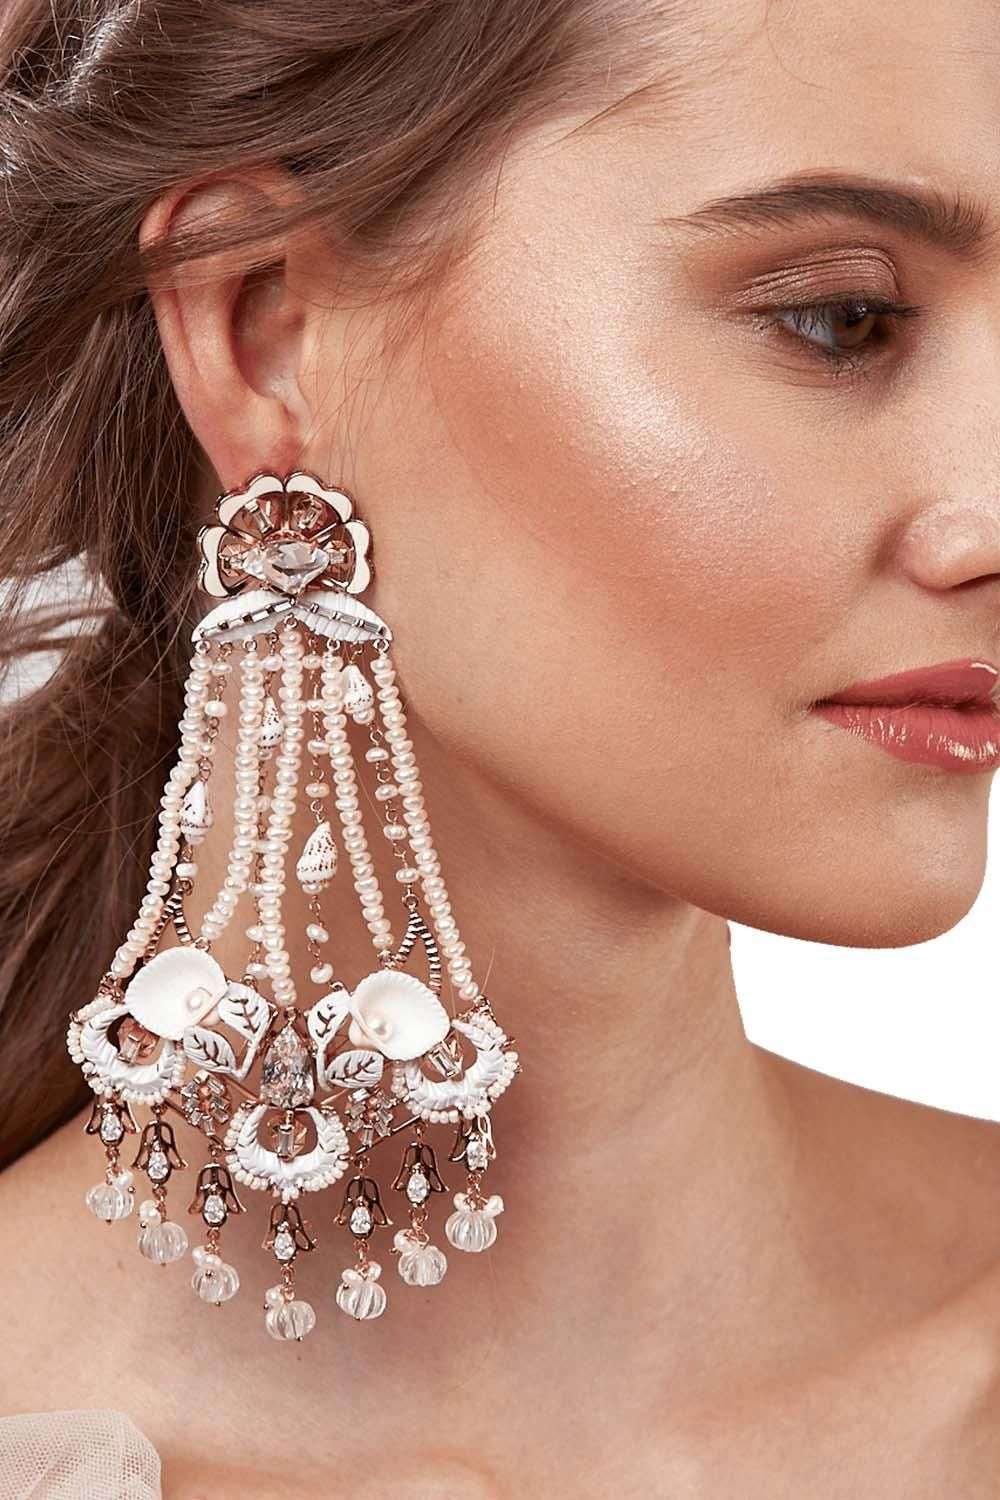 Buy Original Pearl Jewellery Set Online in India - Amama